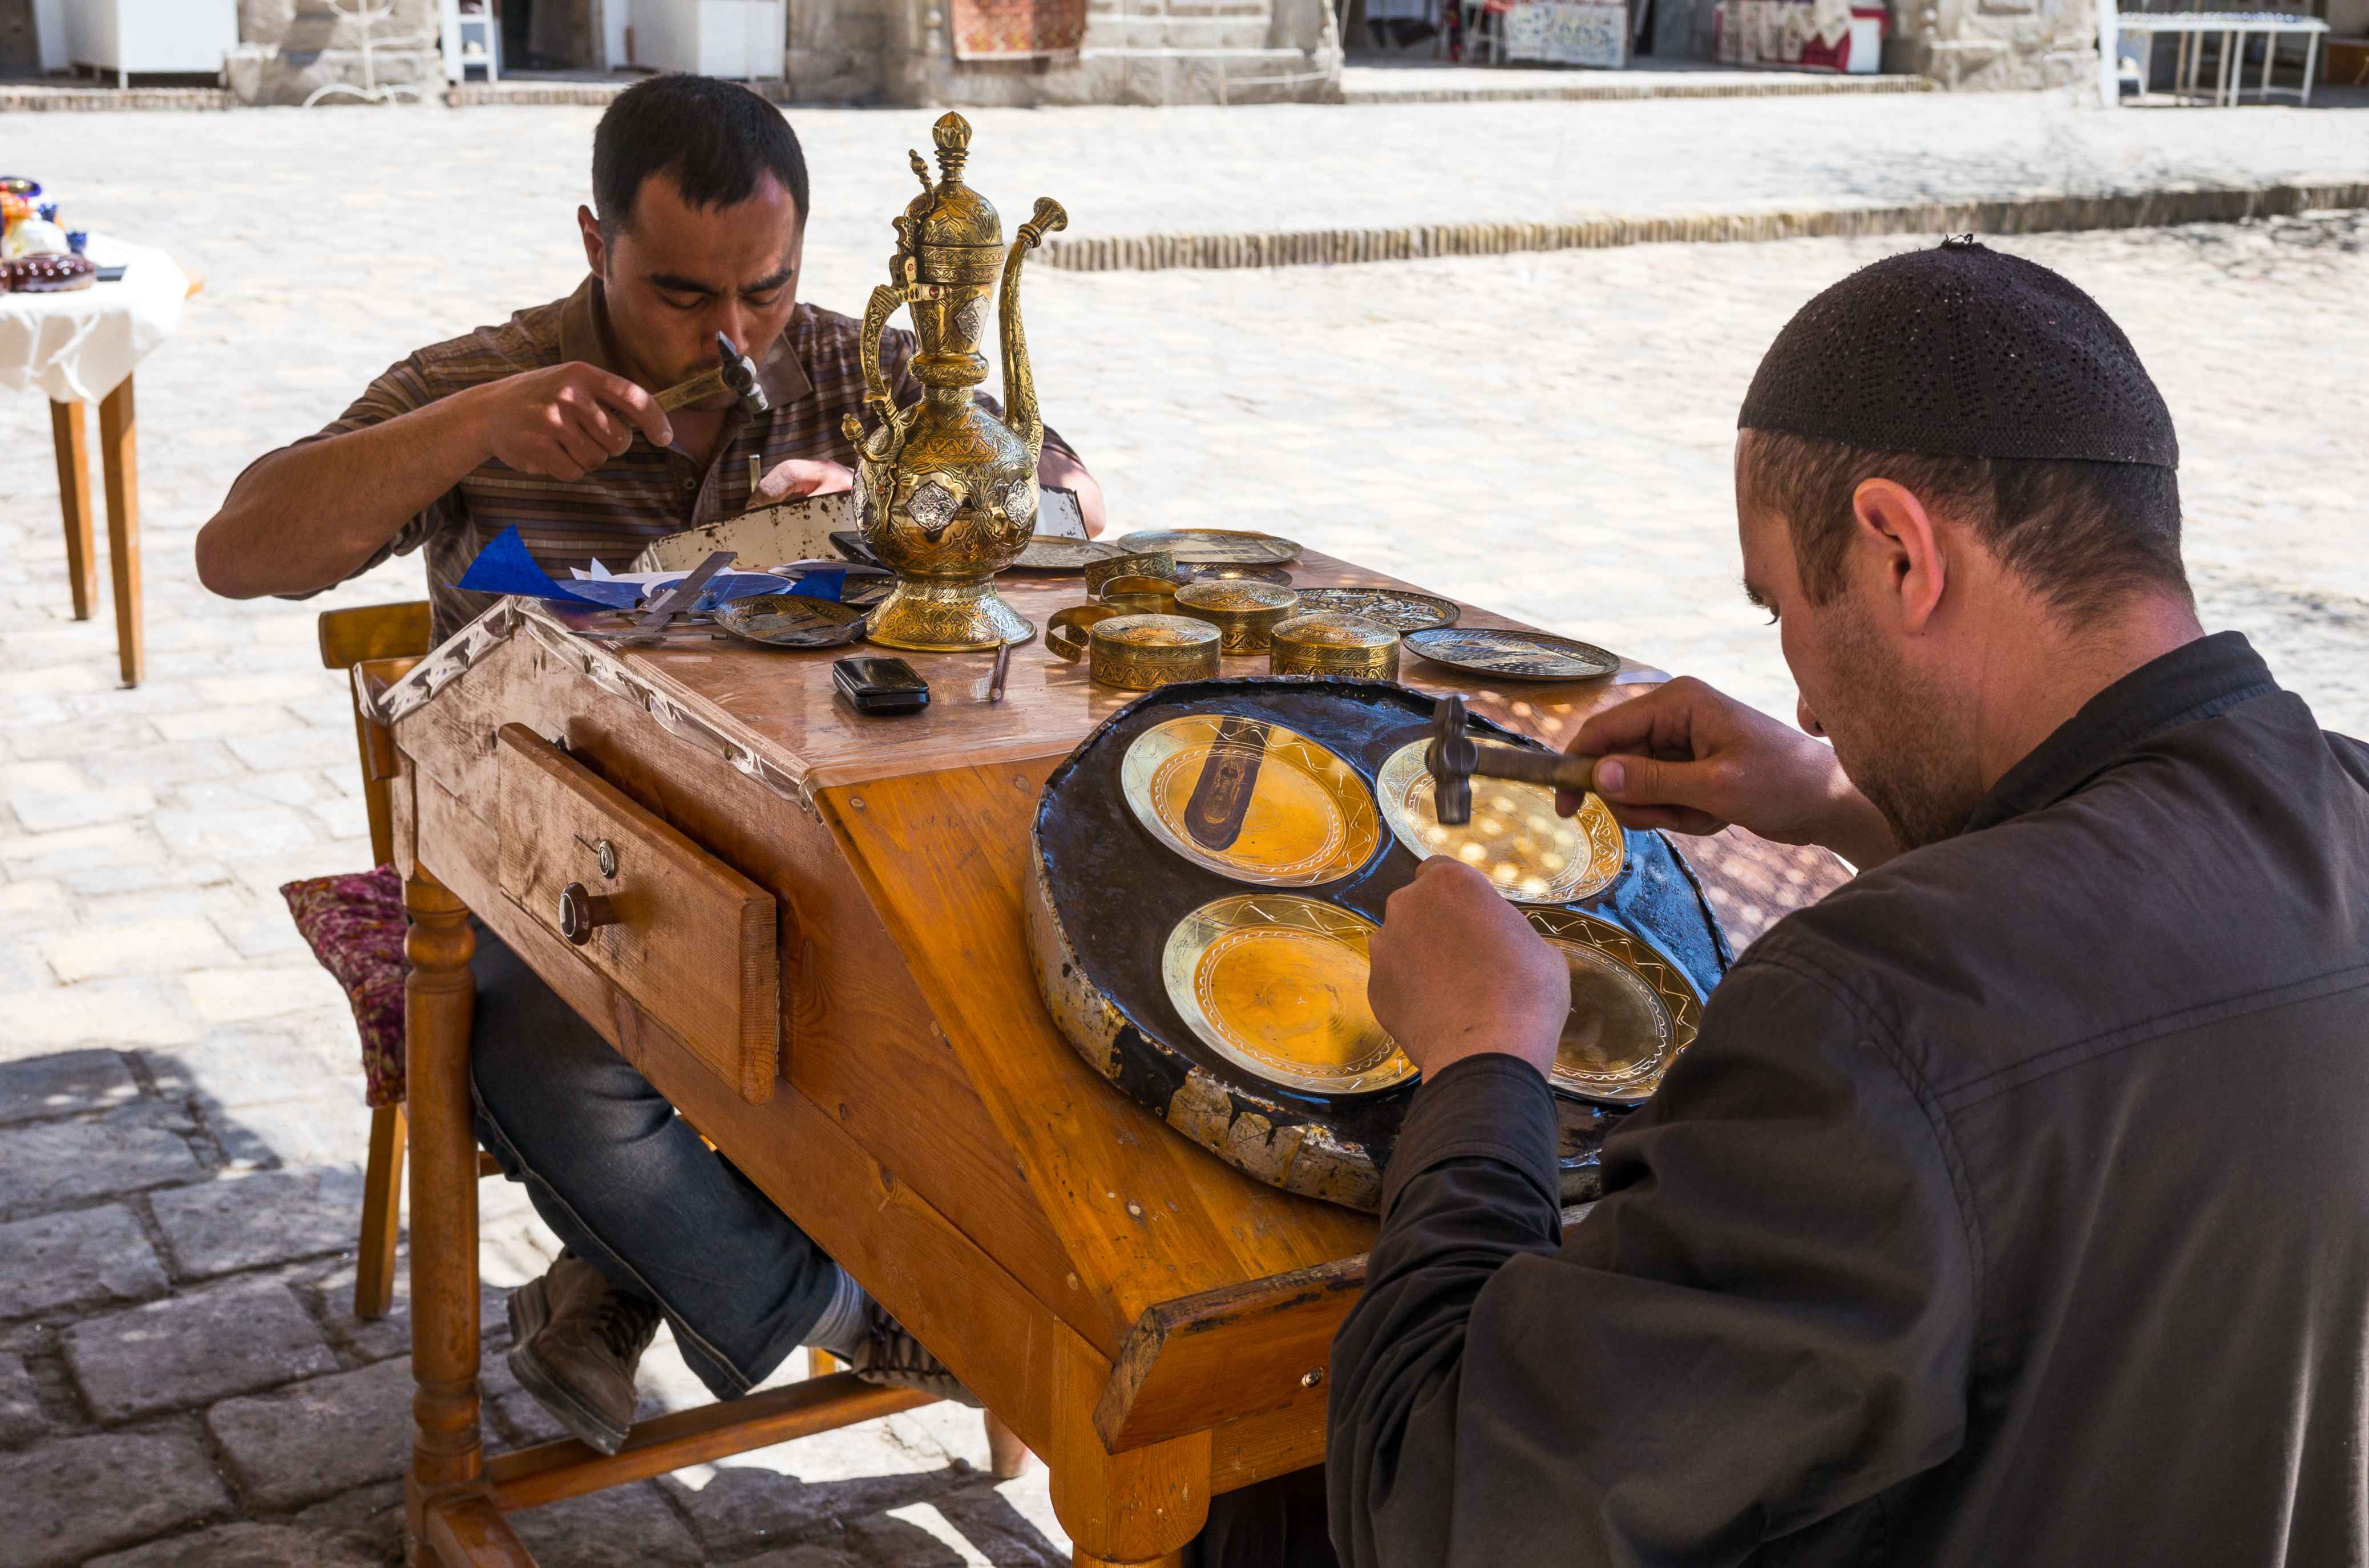 Bukhara, Uzbekistan - April 16, 2014 : Craftsmen at work in the Taqi Sarrafon market in the old city center